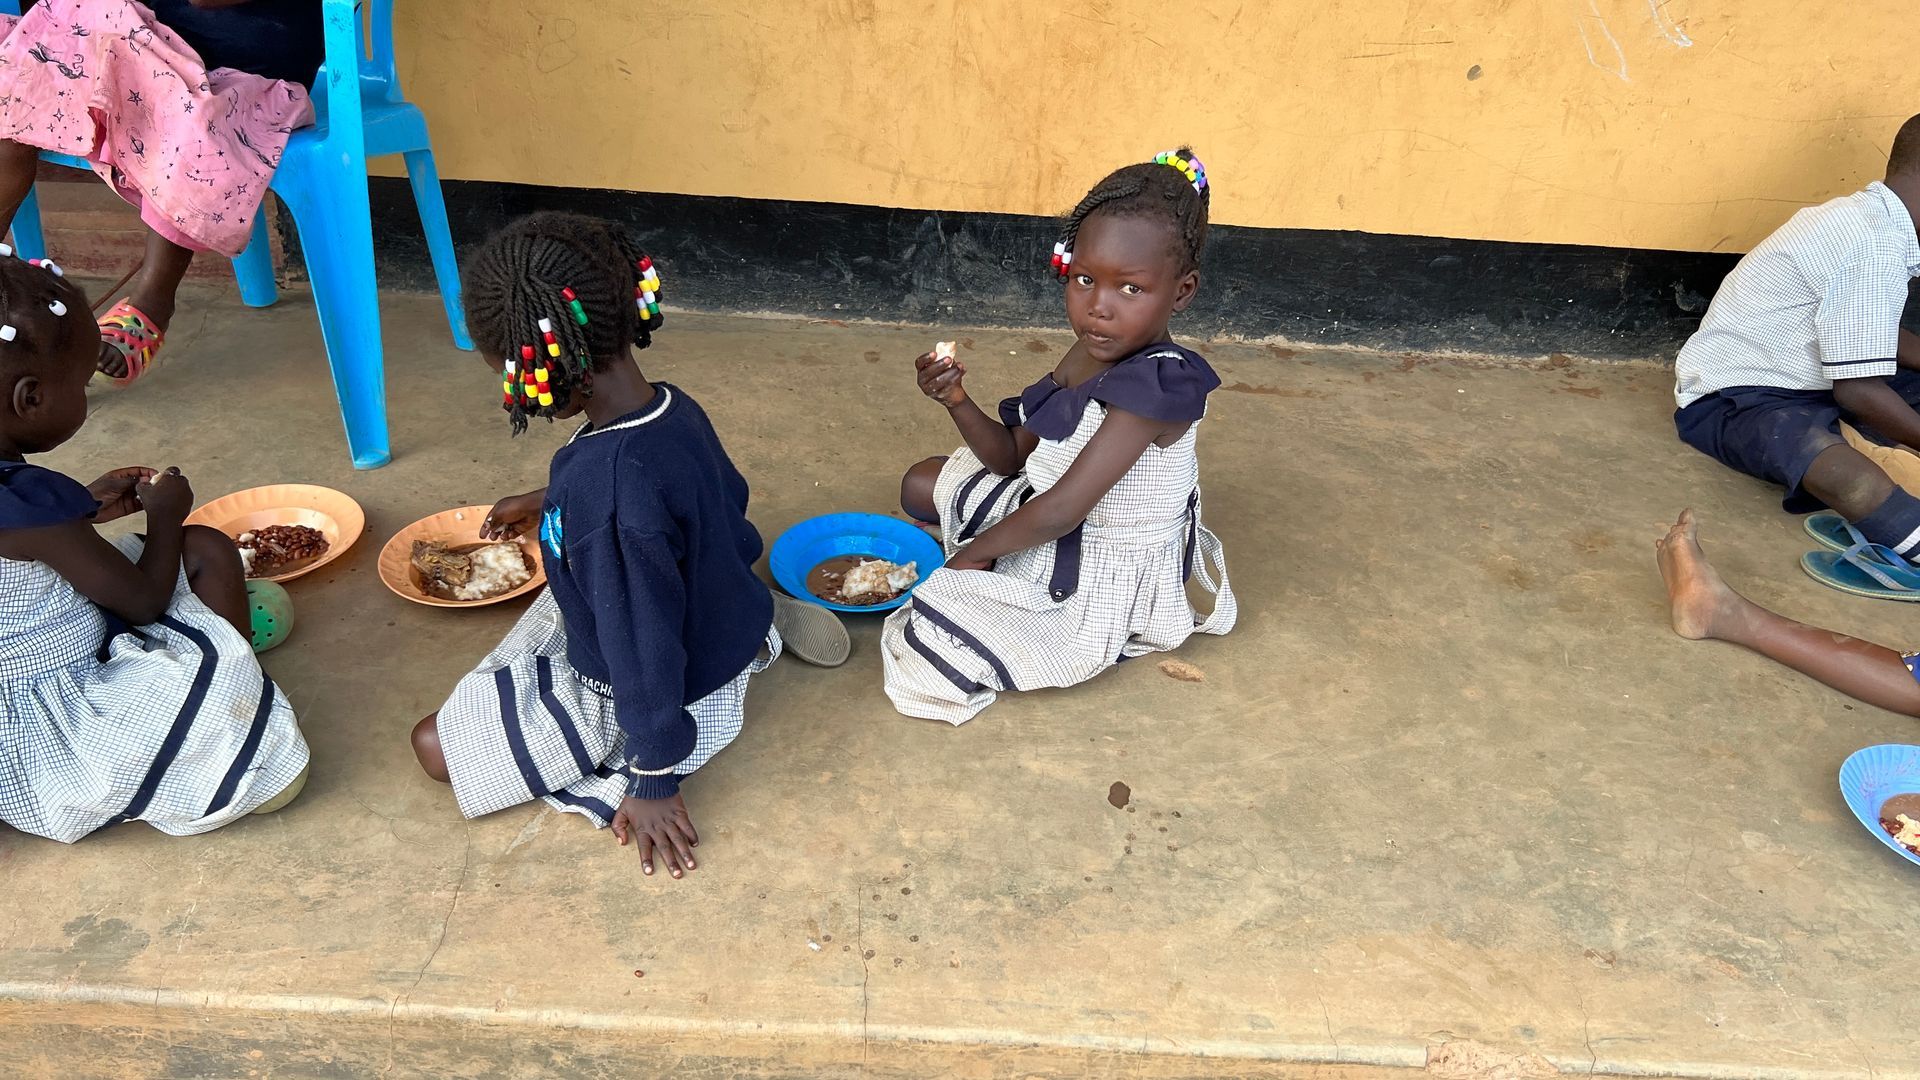 Starving African children at Amigos' school in Uganda enjoy a meal after school activities